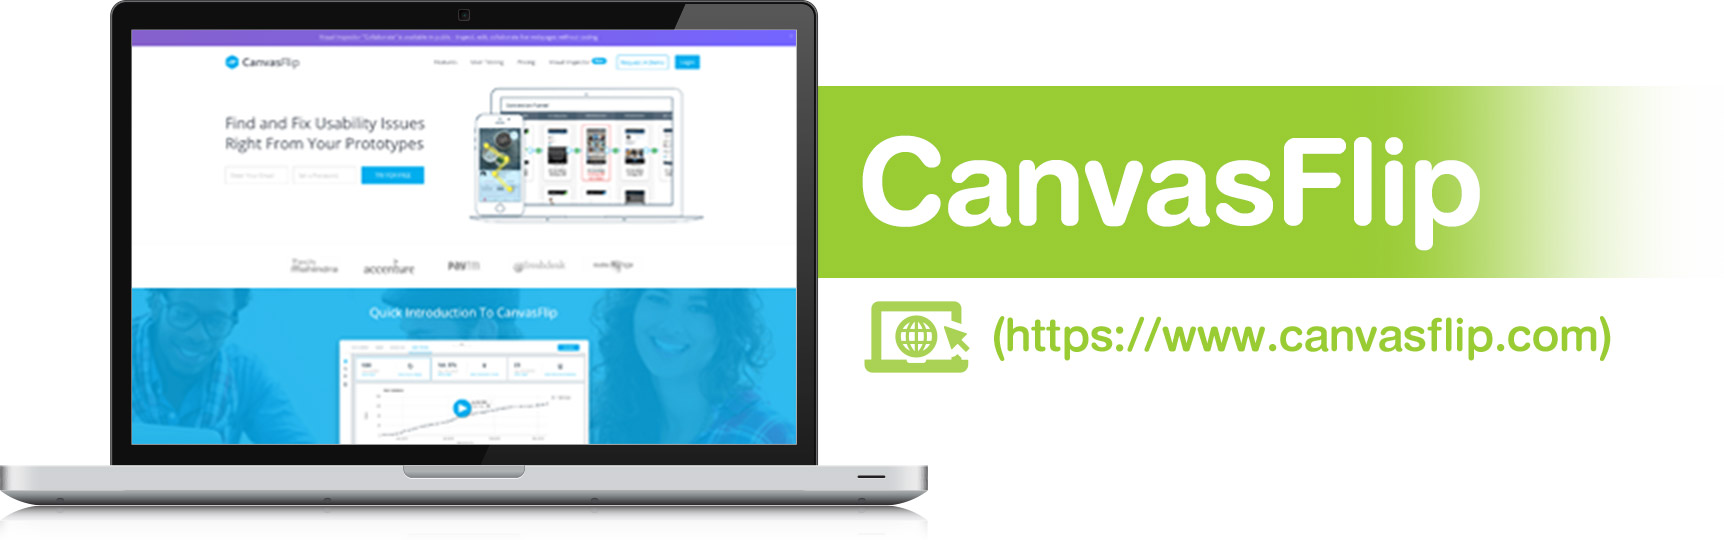 CanvasFlip เครื่องมือสร้าง Prototype อีกหนึ่งตัวที่เหมาะกับ Startup Thailand